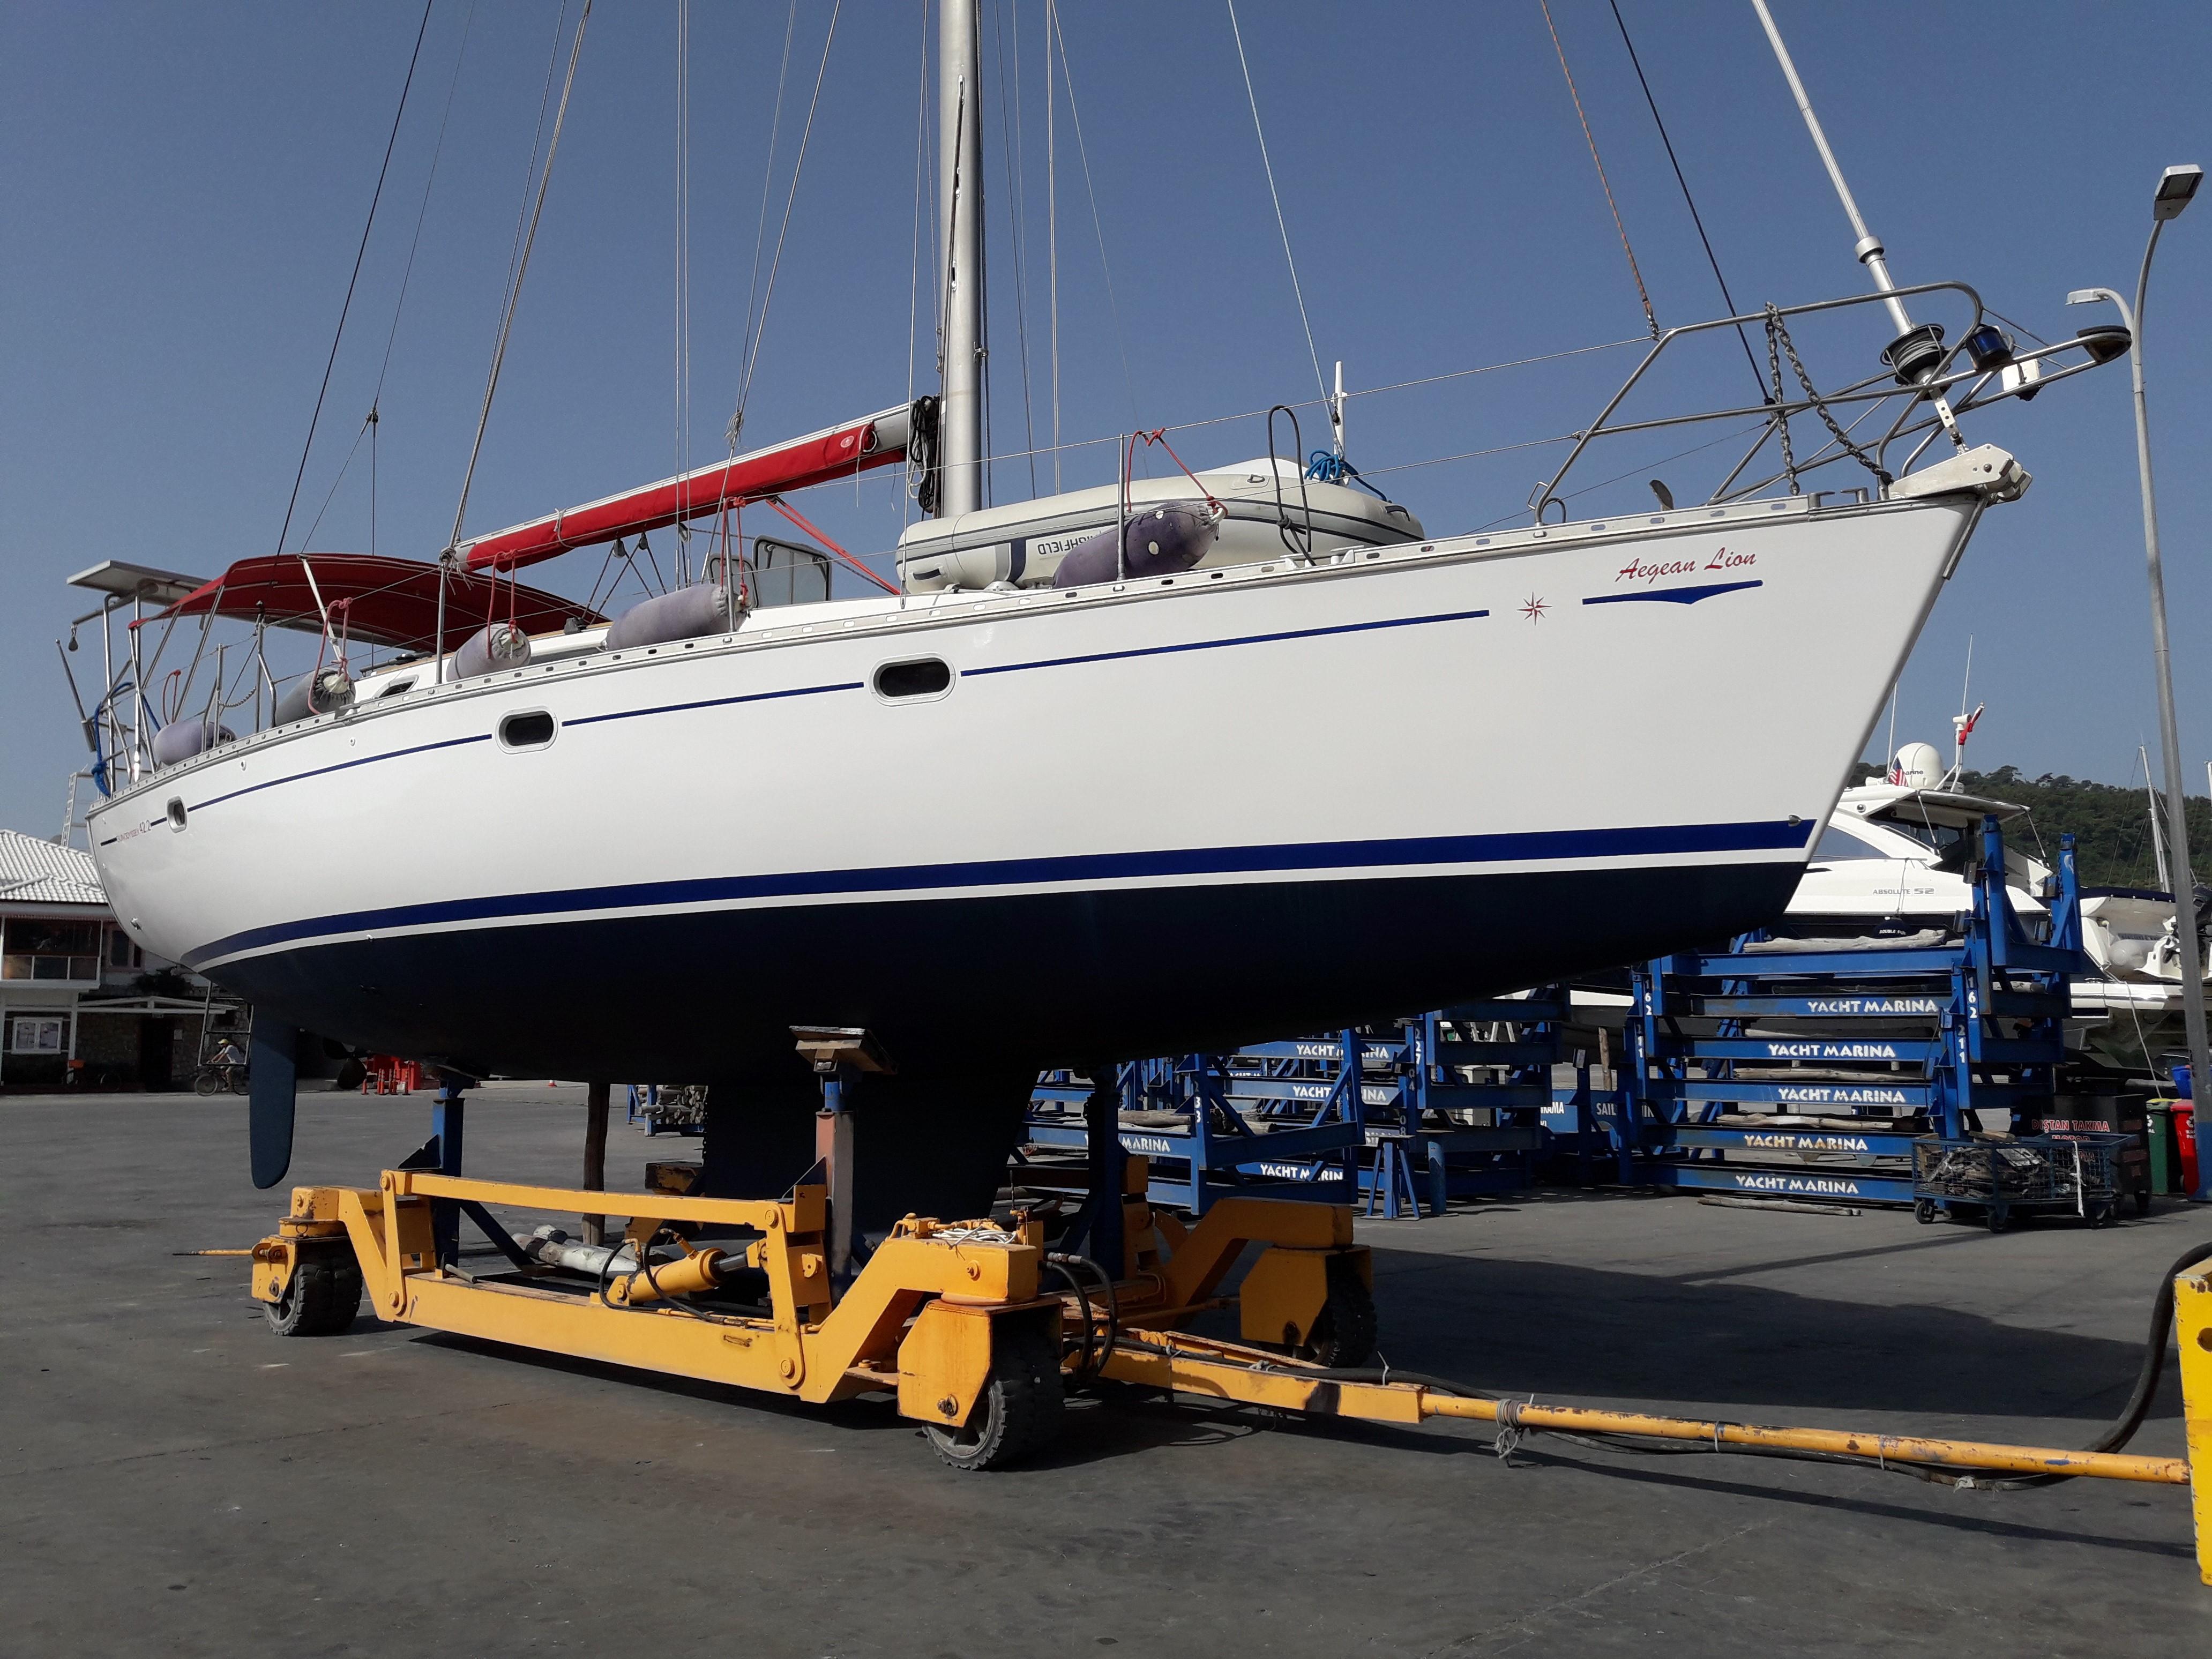 42 foot jeanneau sailboat for sale